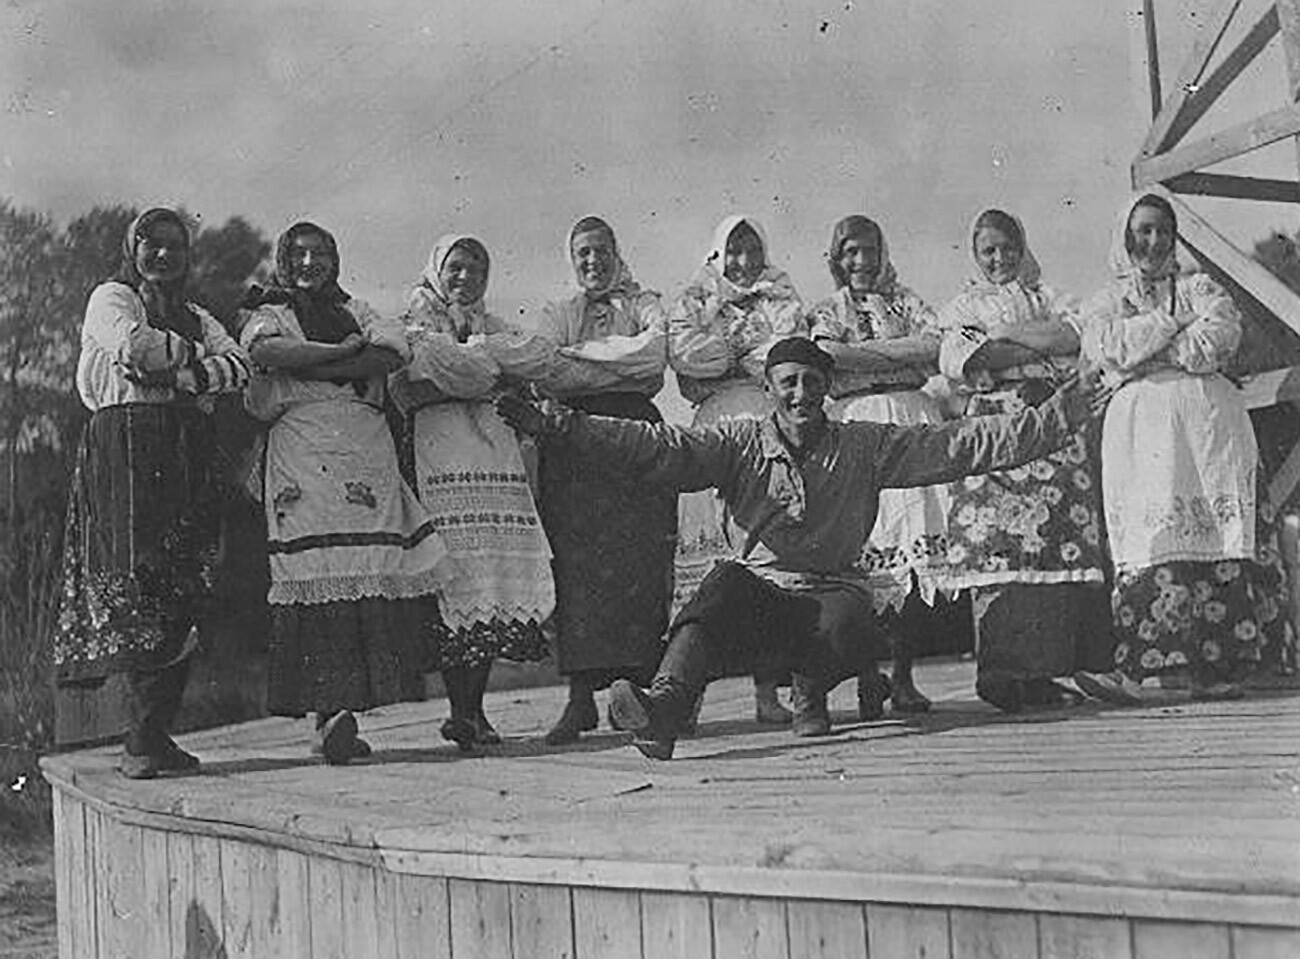 Folk dance in the 1930s